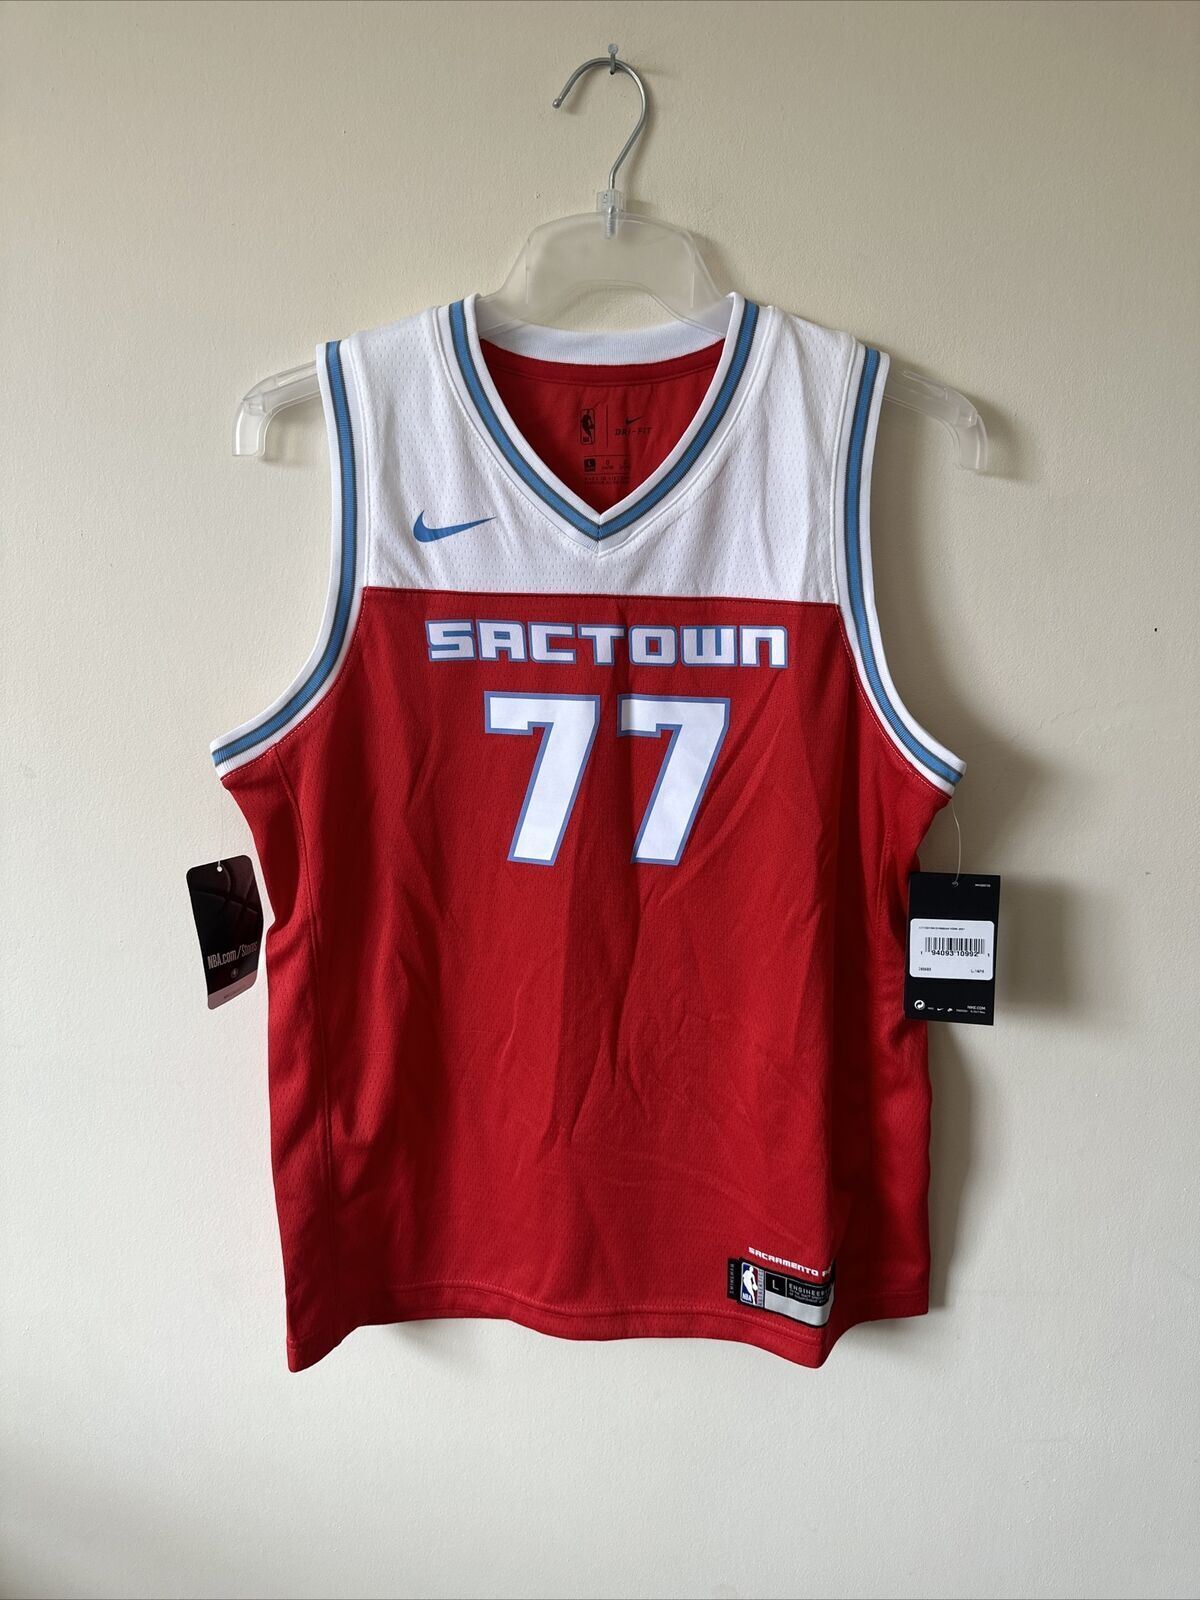 Nike NBA Sacramento Kings Swingman Jersey SCHRODER 77 Youth 12-13 Years